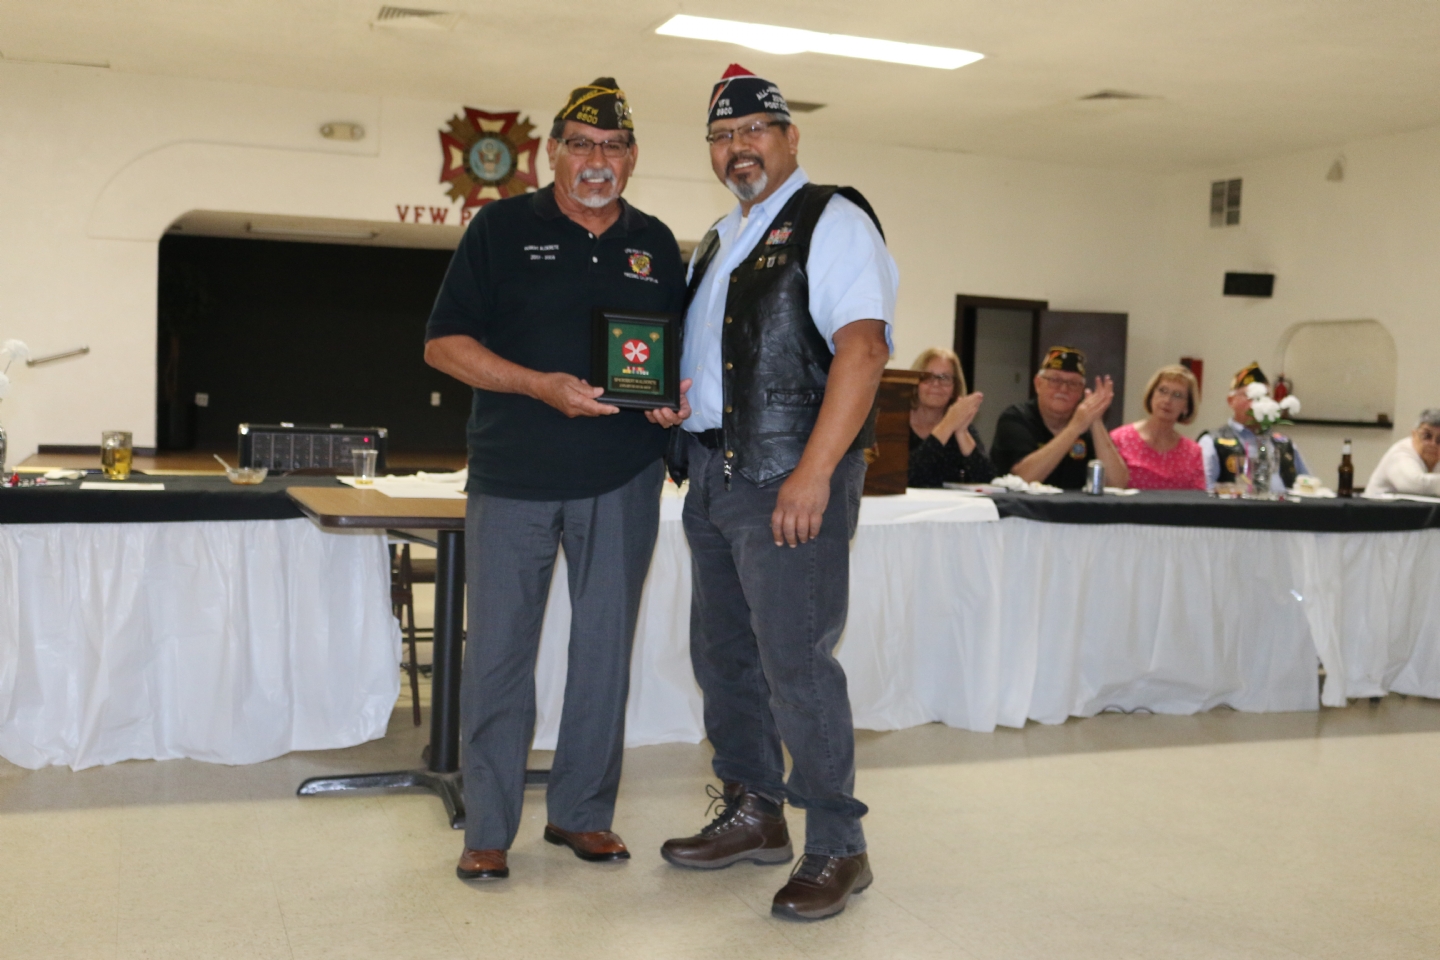 Commander Fernandez presents his Commander's Award to Senior Vice Commander Robert Alderete.